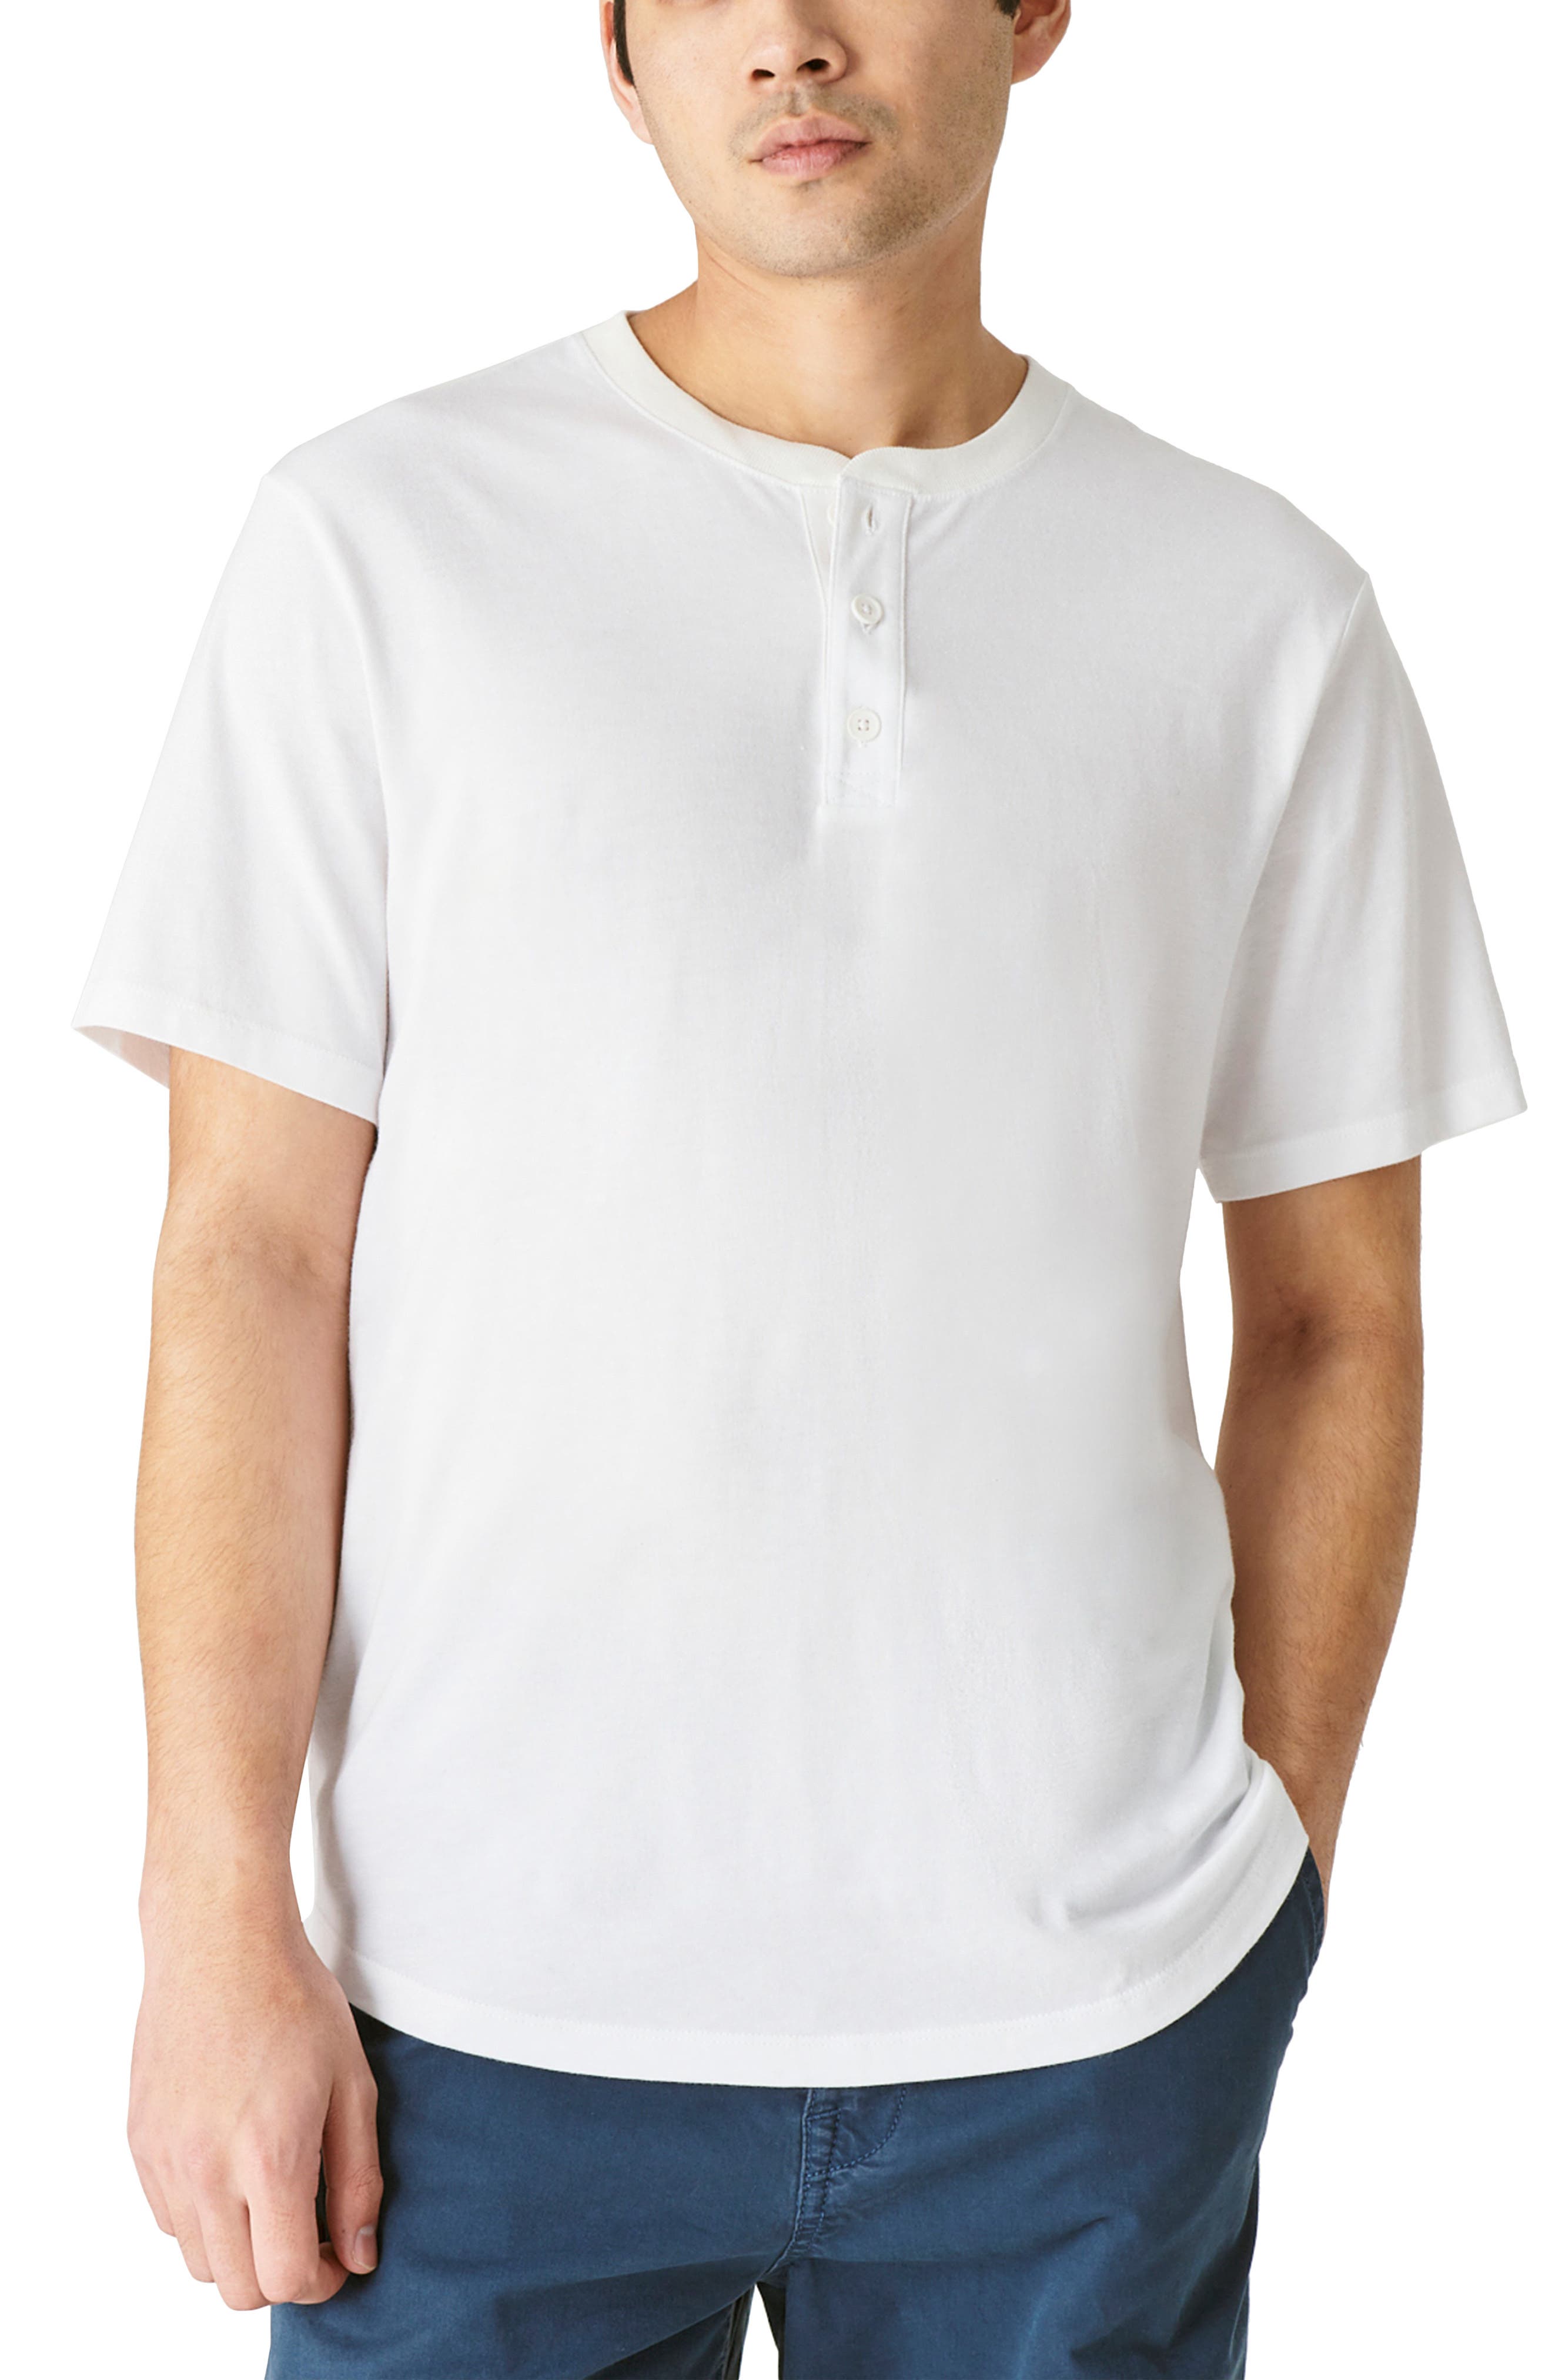 H.Wang Henley Shirts Mens Cotton Slim Fit Short Sleeve Muscle T-Shirt 